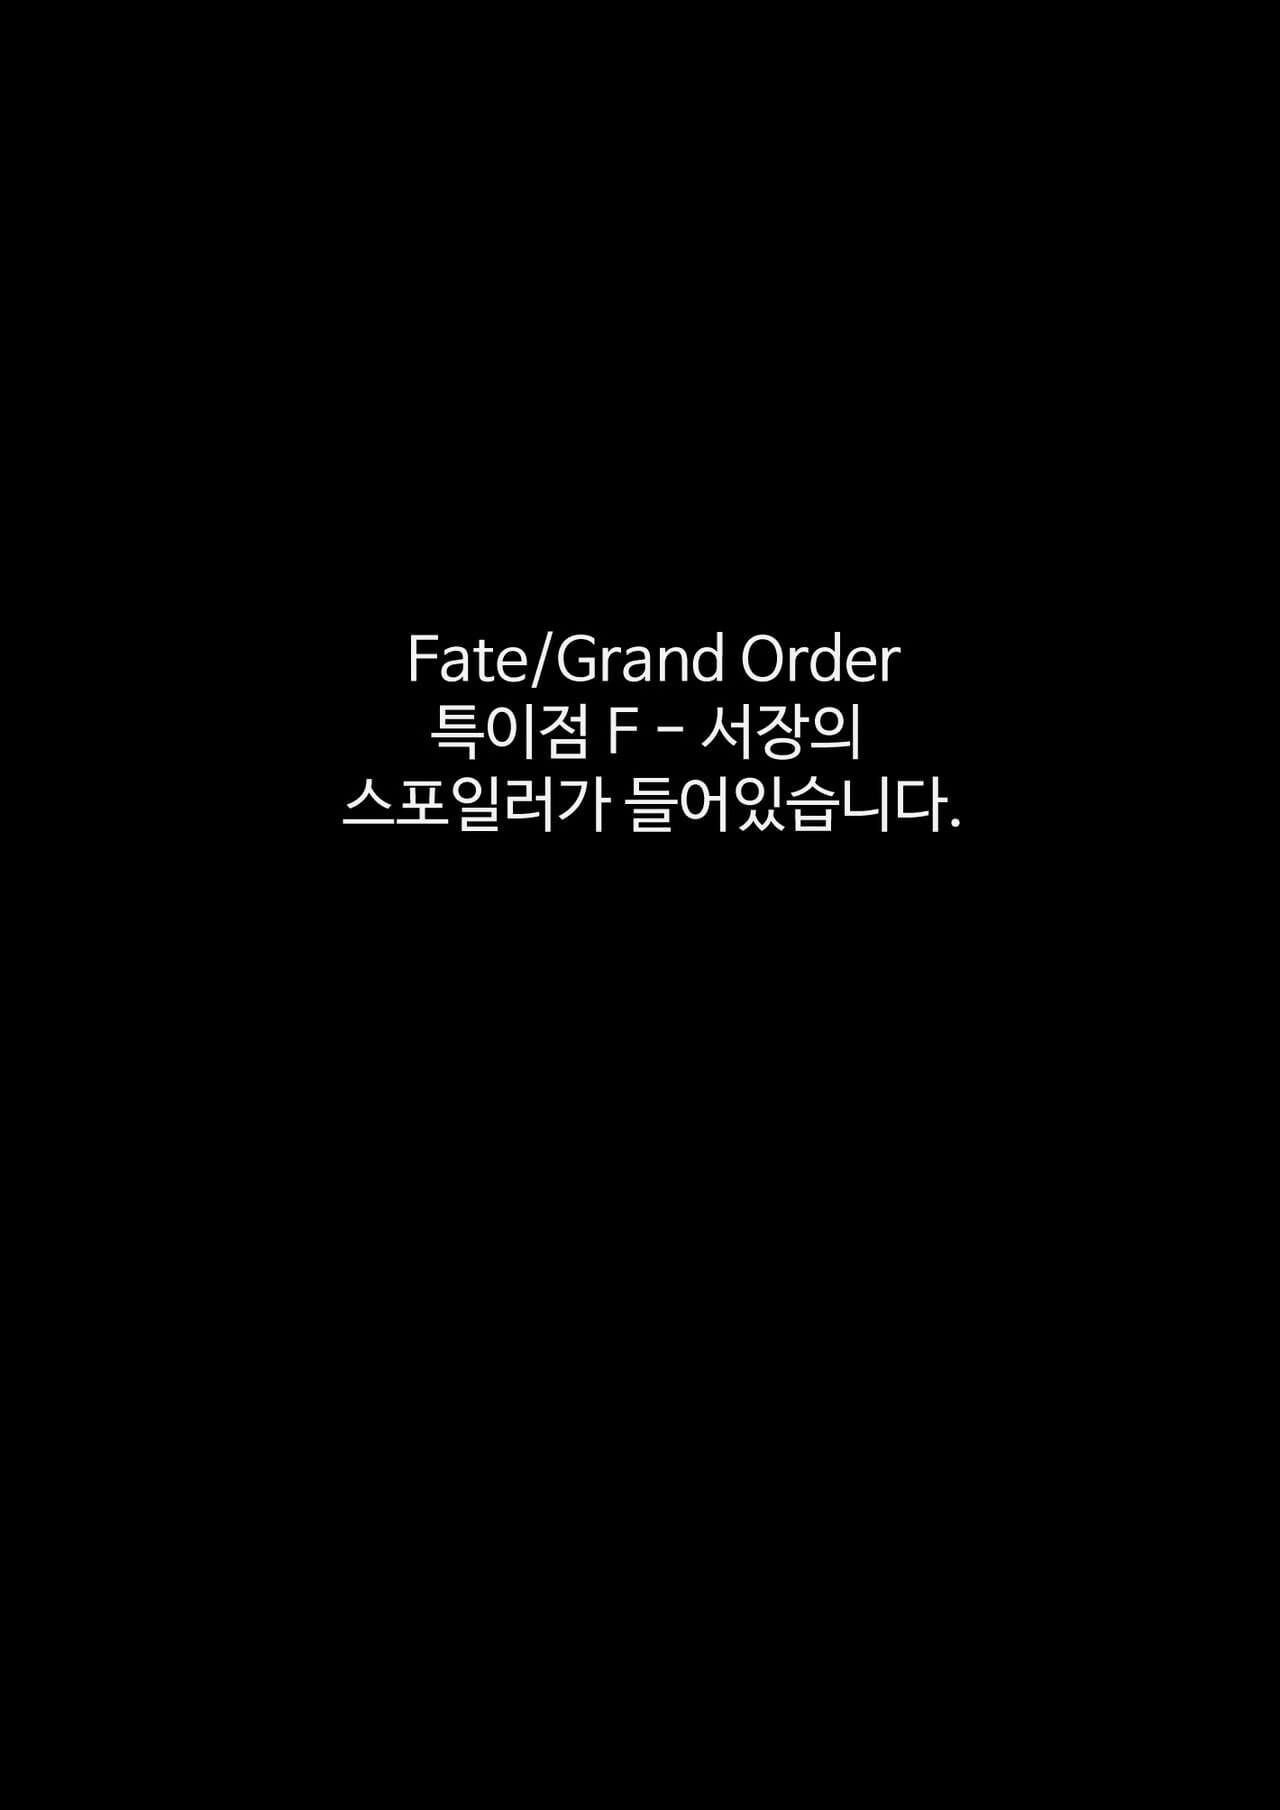 MACK fgo オリガ マリー fate/grand 注文 韓国語